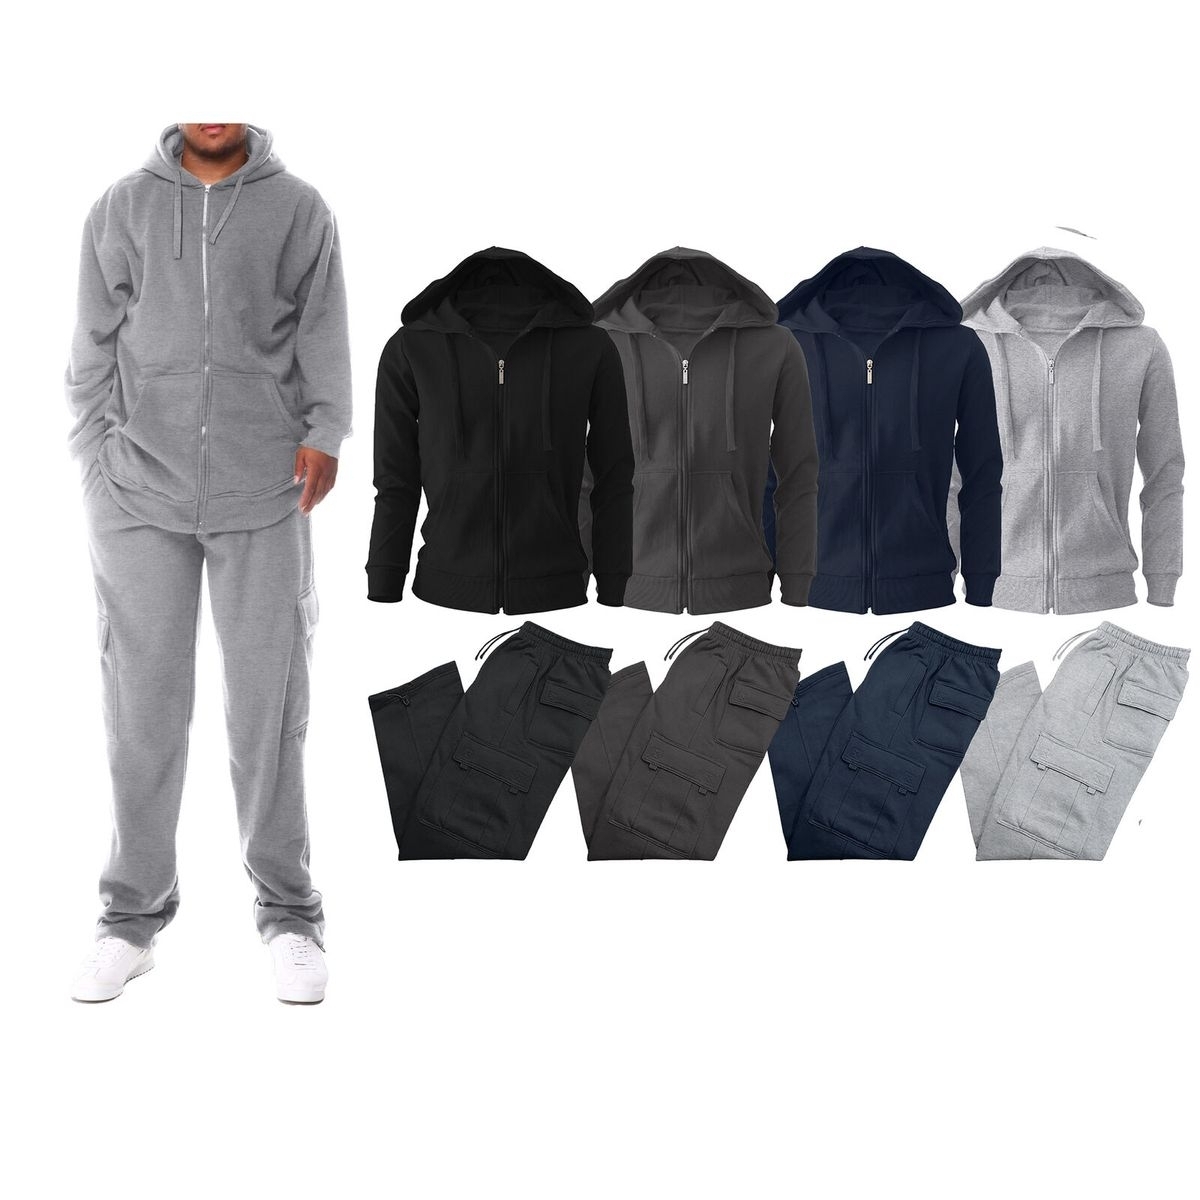 Men's Big & Tall Winter Warm Athletic Active Cozy Fleece Lined Multi-Pocket Full Zip Up Cargo Tracksuit - Black, Xx-large